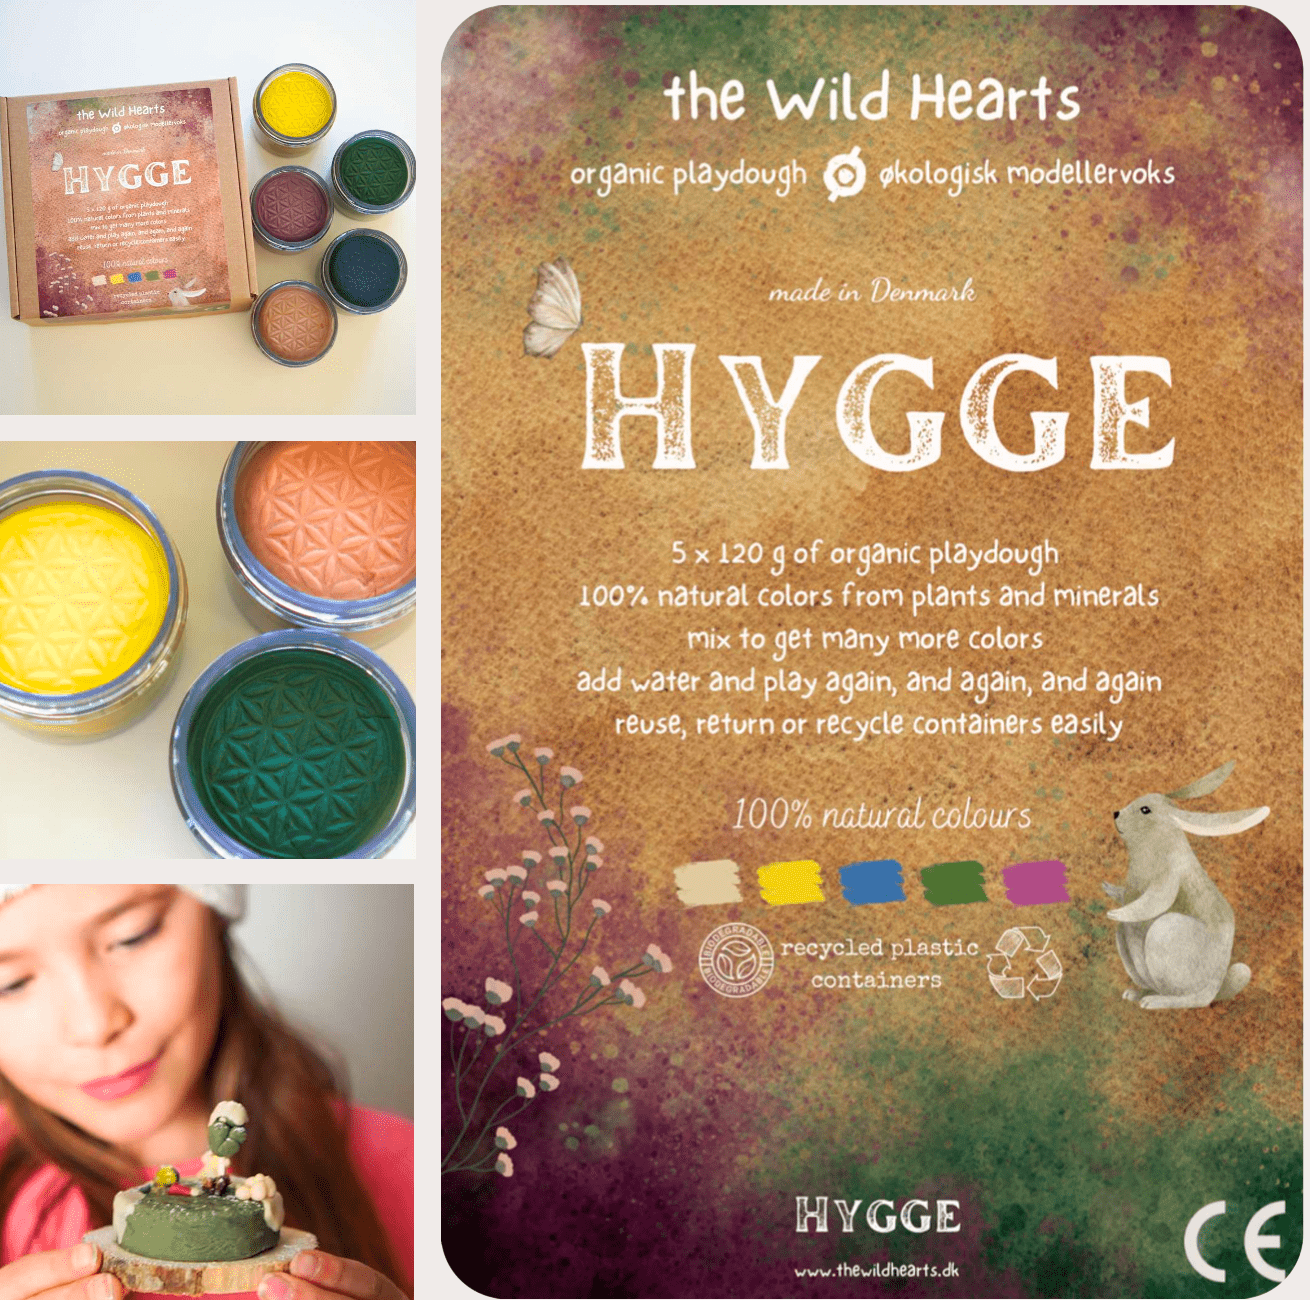 The Wild Hearts - Biologische Klei set - Hygge 5 x 120g - Playlaan